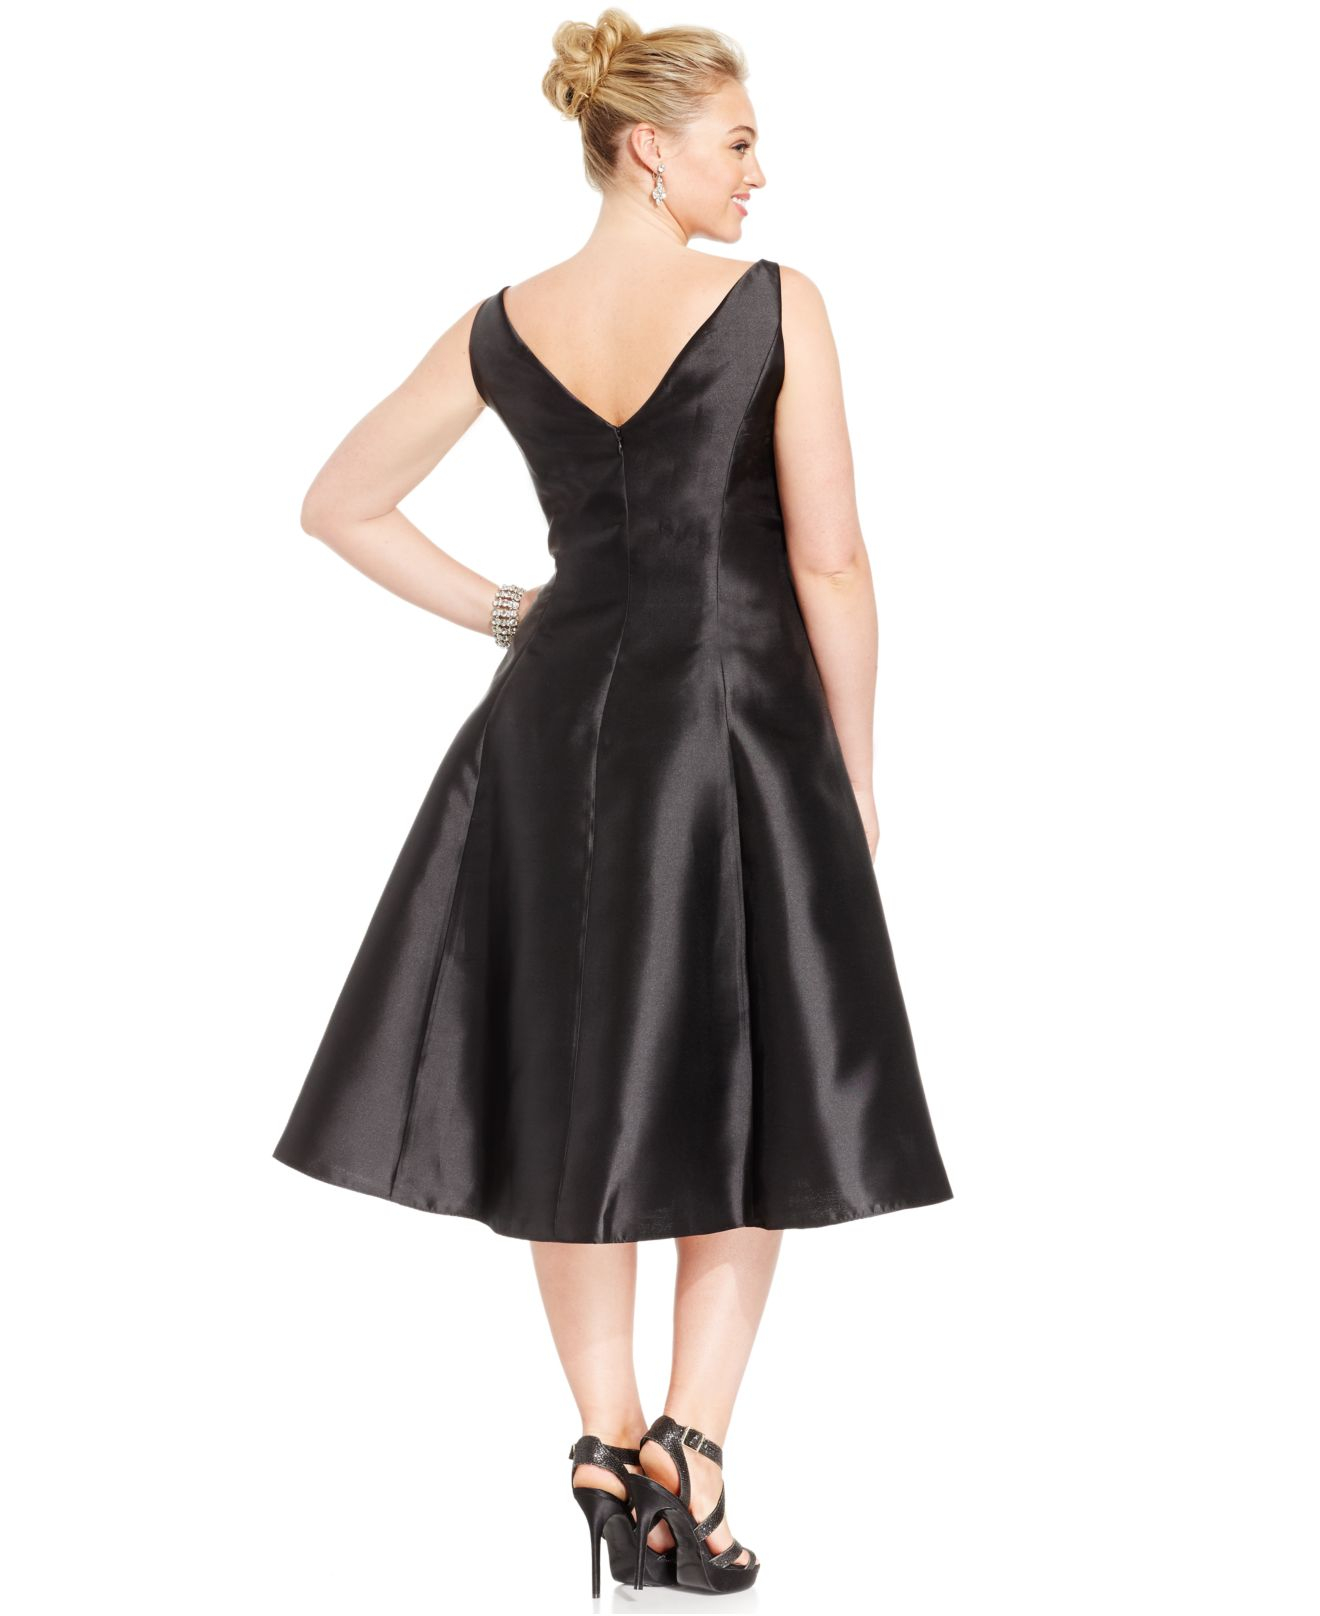 Lyst - Adrianna Papell Plus Size Sleeveless Tea-length Dress in Black